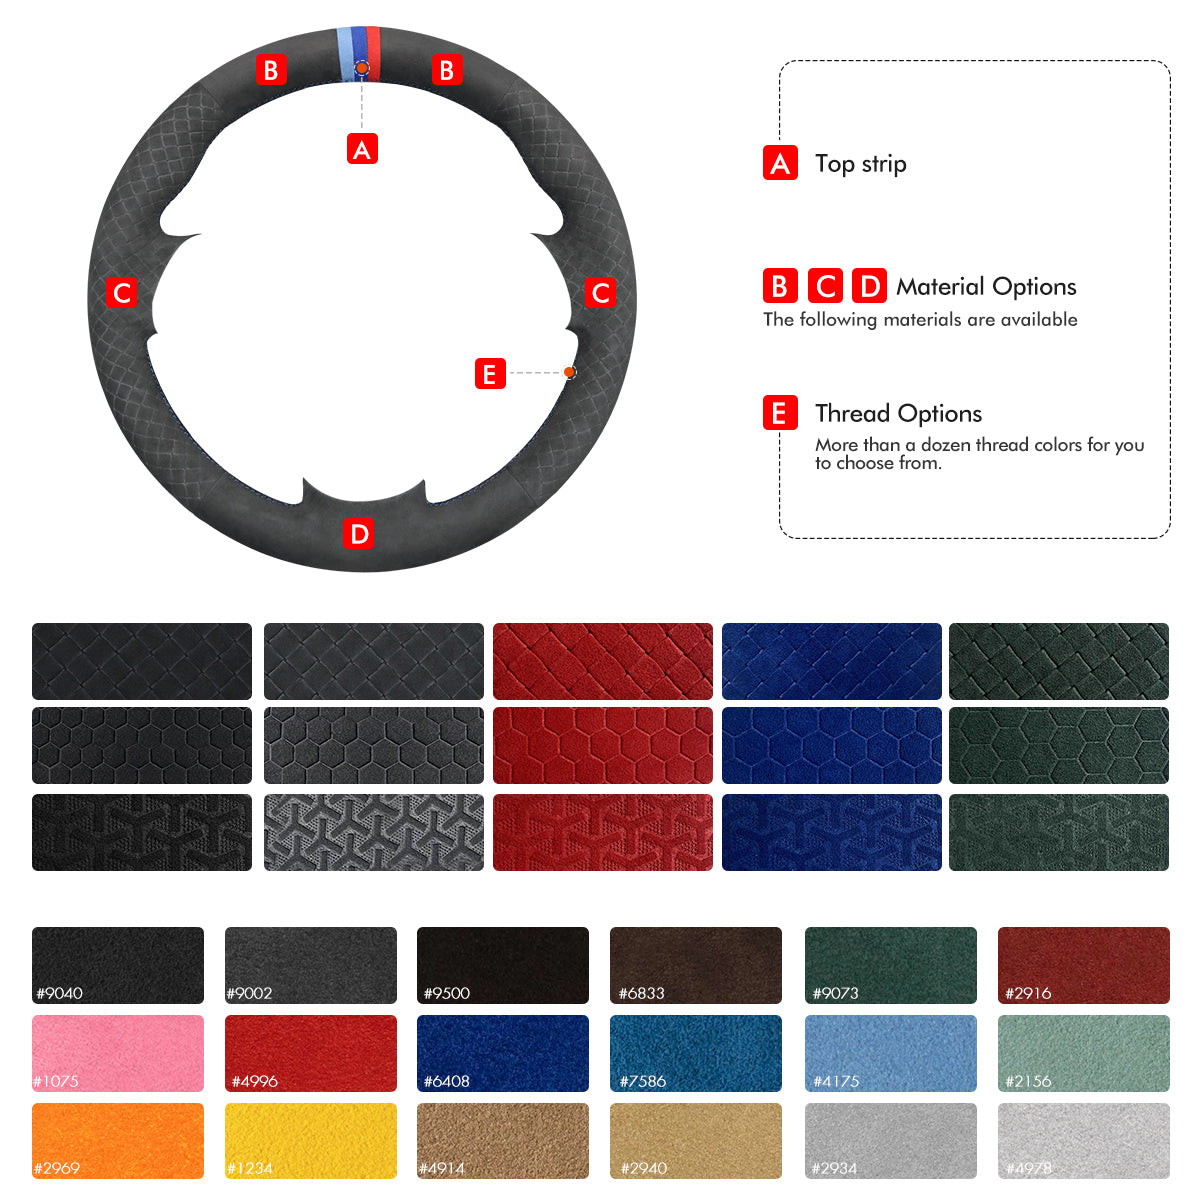 MEWANT Hand Stitch Black Suede Carbon Fiber Car Steering Wheel Cover for Hyundai ix25 2014-2016 / Creta 2016 2017